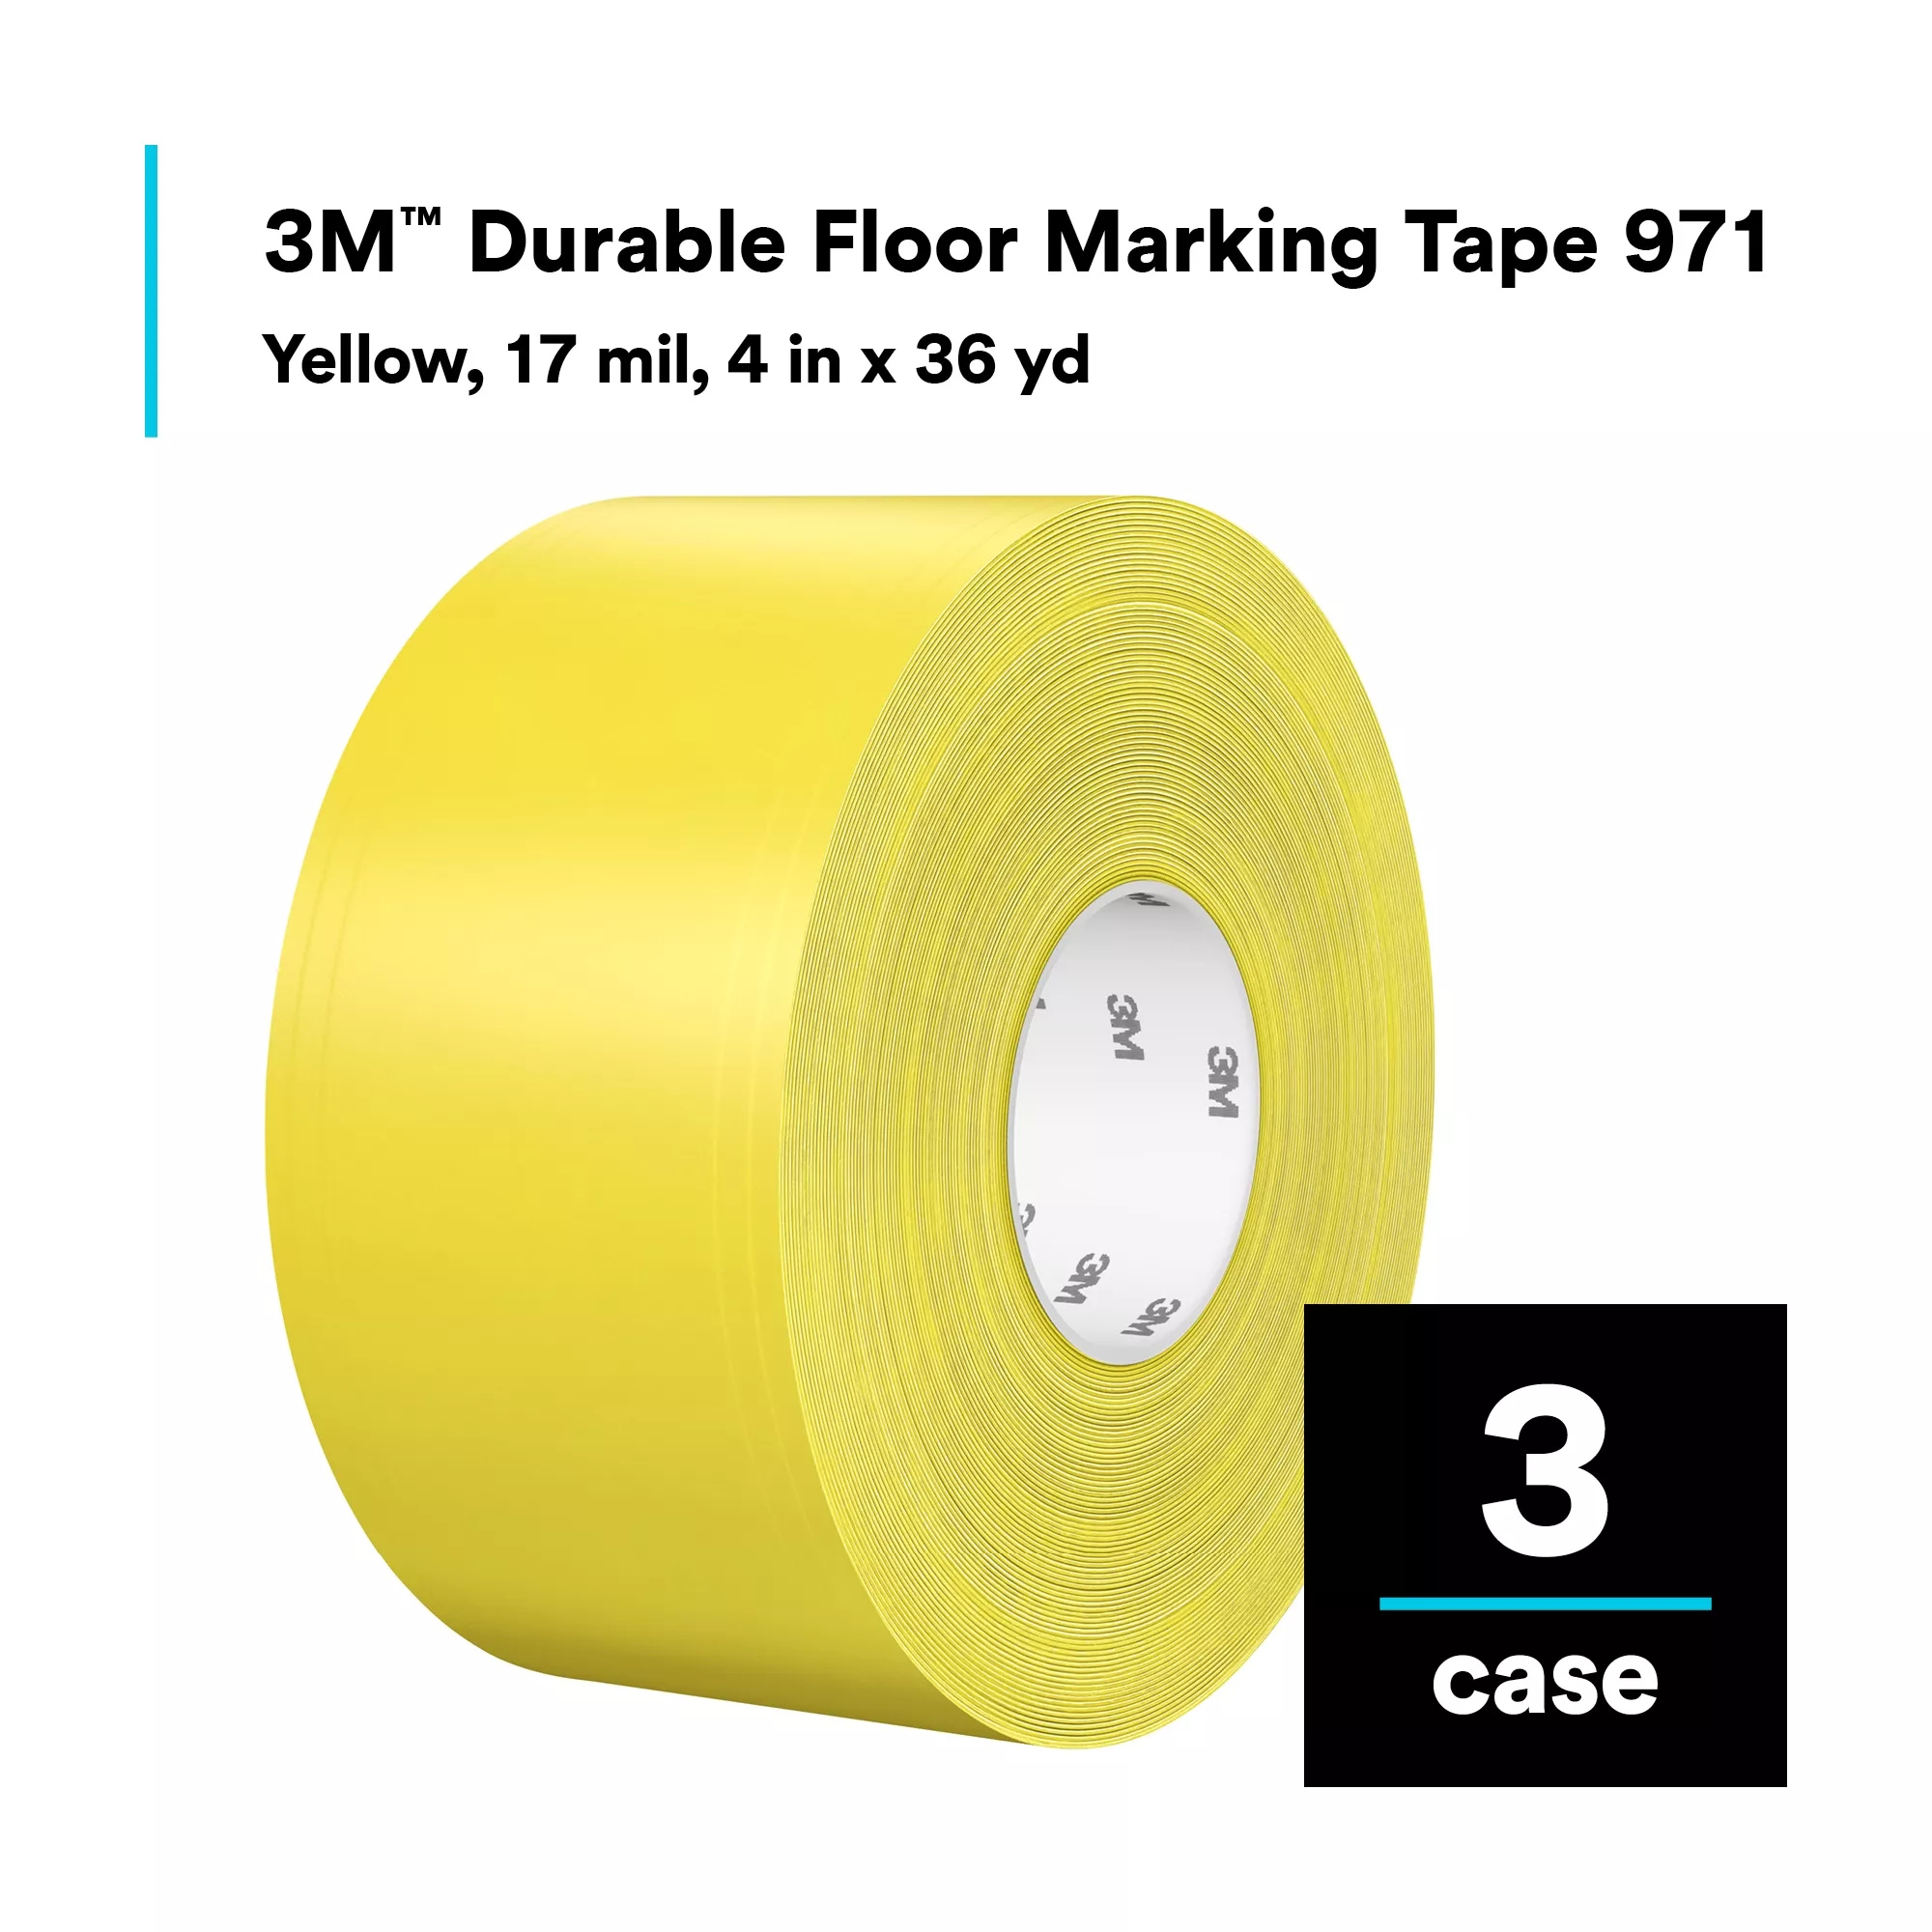 SKU 7100253142 | 3M™ Durable Floor Marking Tape 971